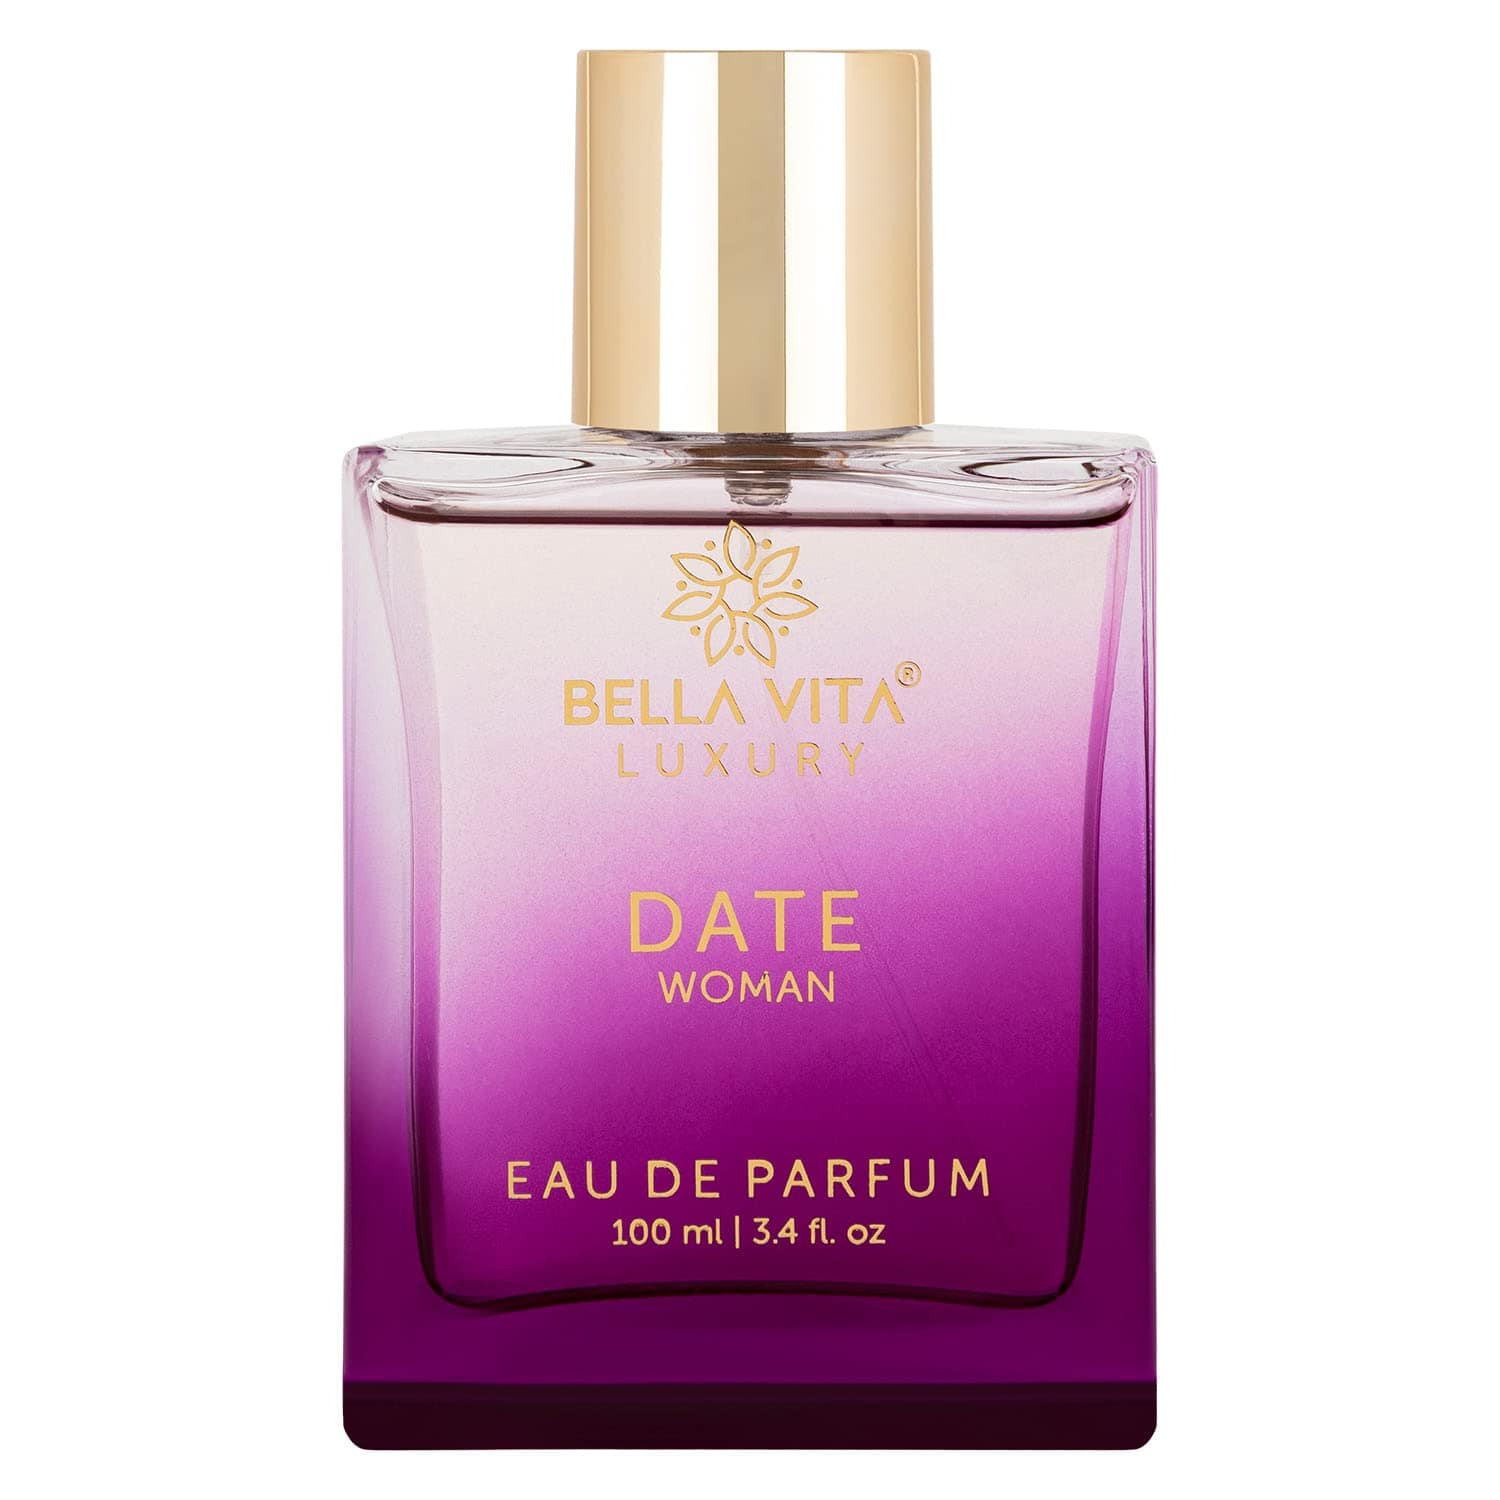 Bella Vita Luxury Date Eau De Parfum Perfume for Women with Pink Pepper, Red Fruit & Jasmine |Fruity & Spicy Long Lasting EDP Frgarance Scent, 20ml - YuvaFlowers